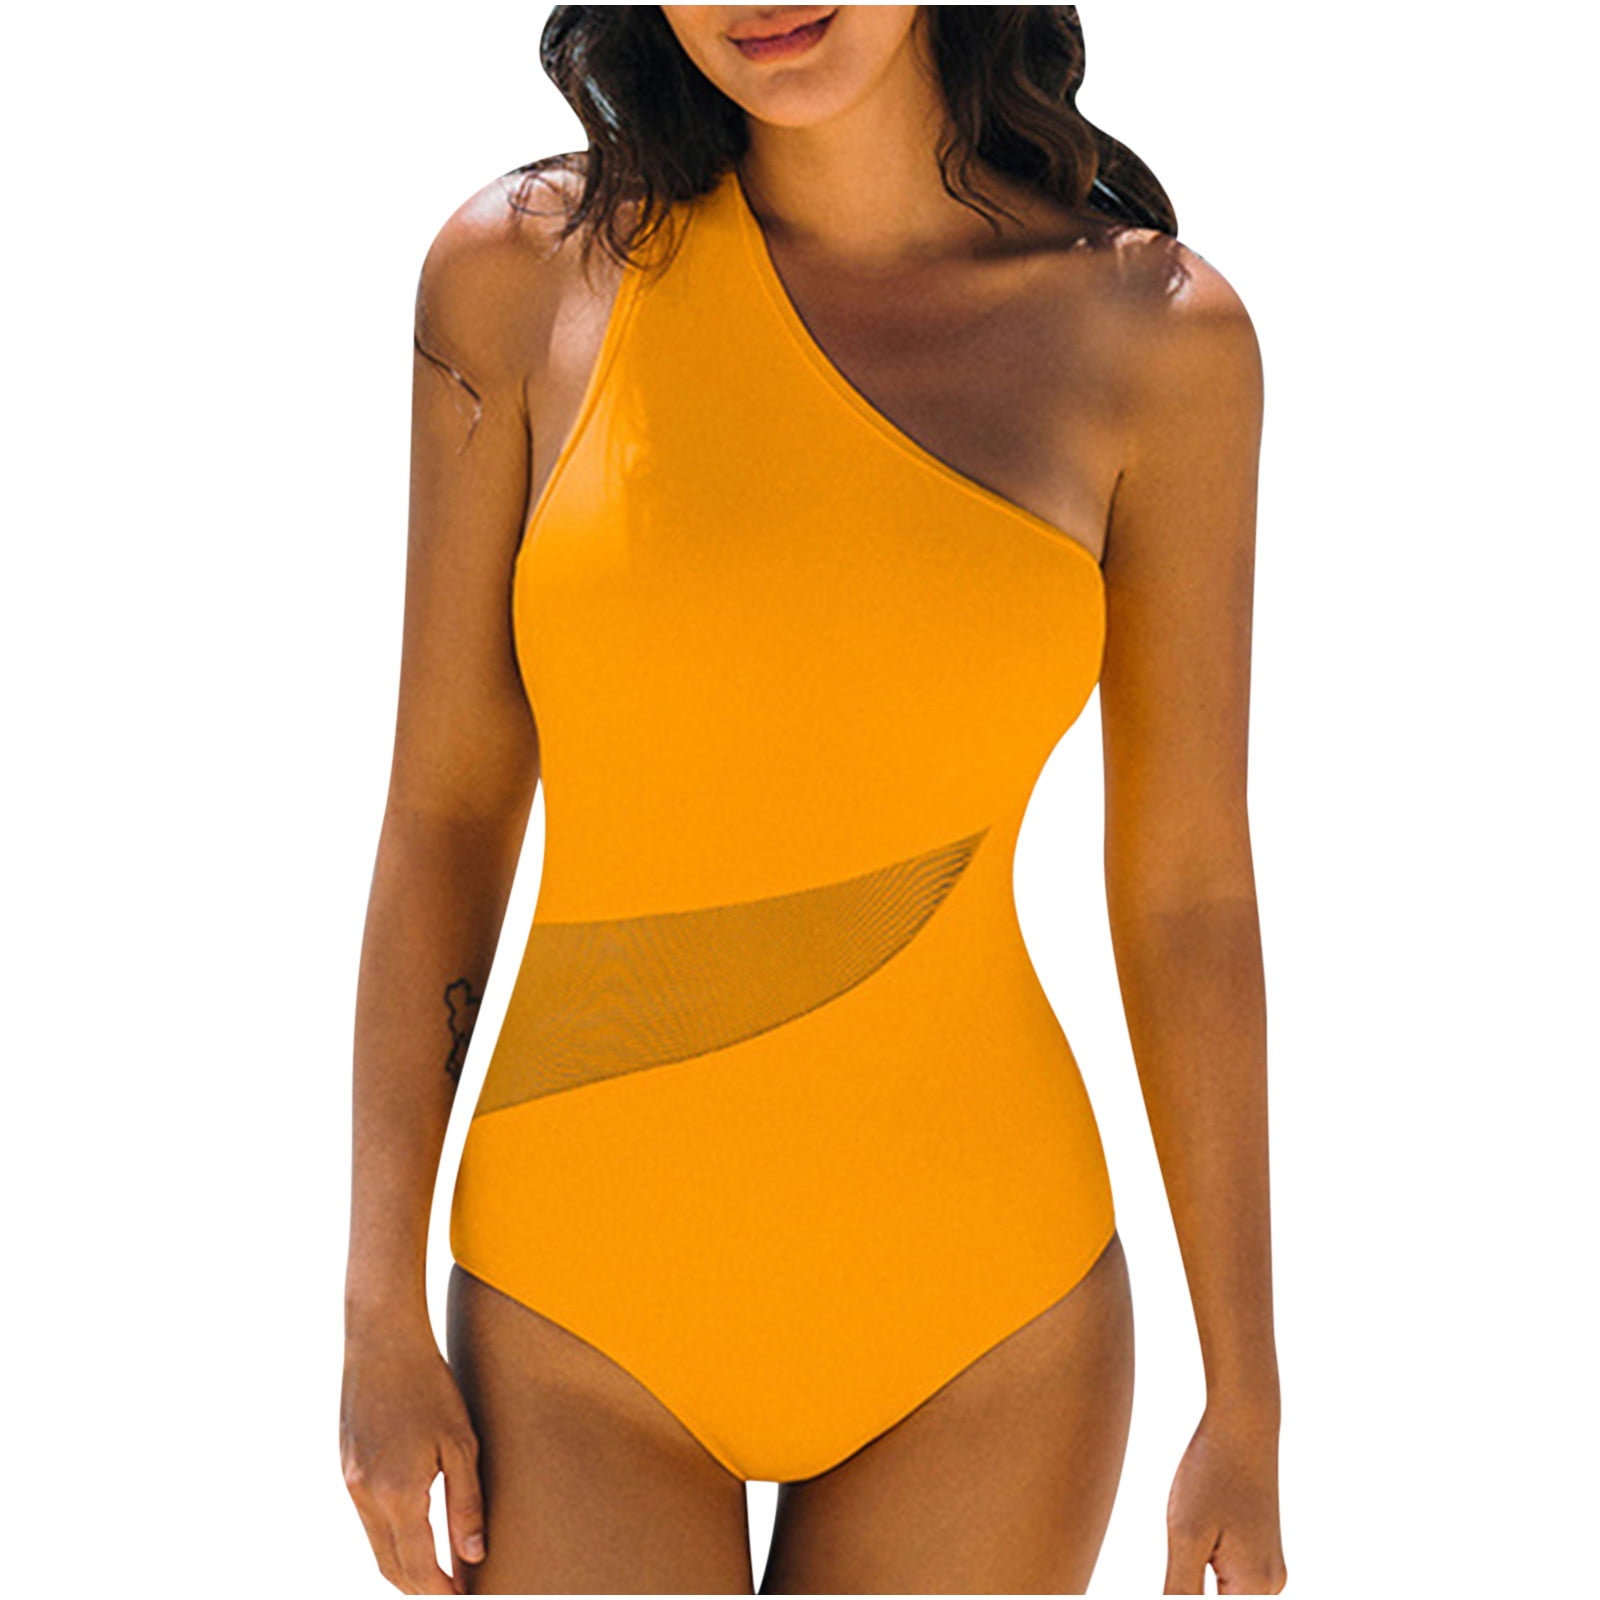 Tawop Nursing Bathing Suit Women Sexy Solid Strap Waist Open Back Lace Two  Piece Bikini Swimsuit Yellow Size M 